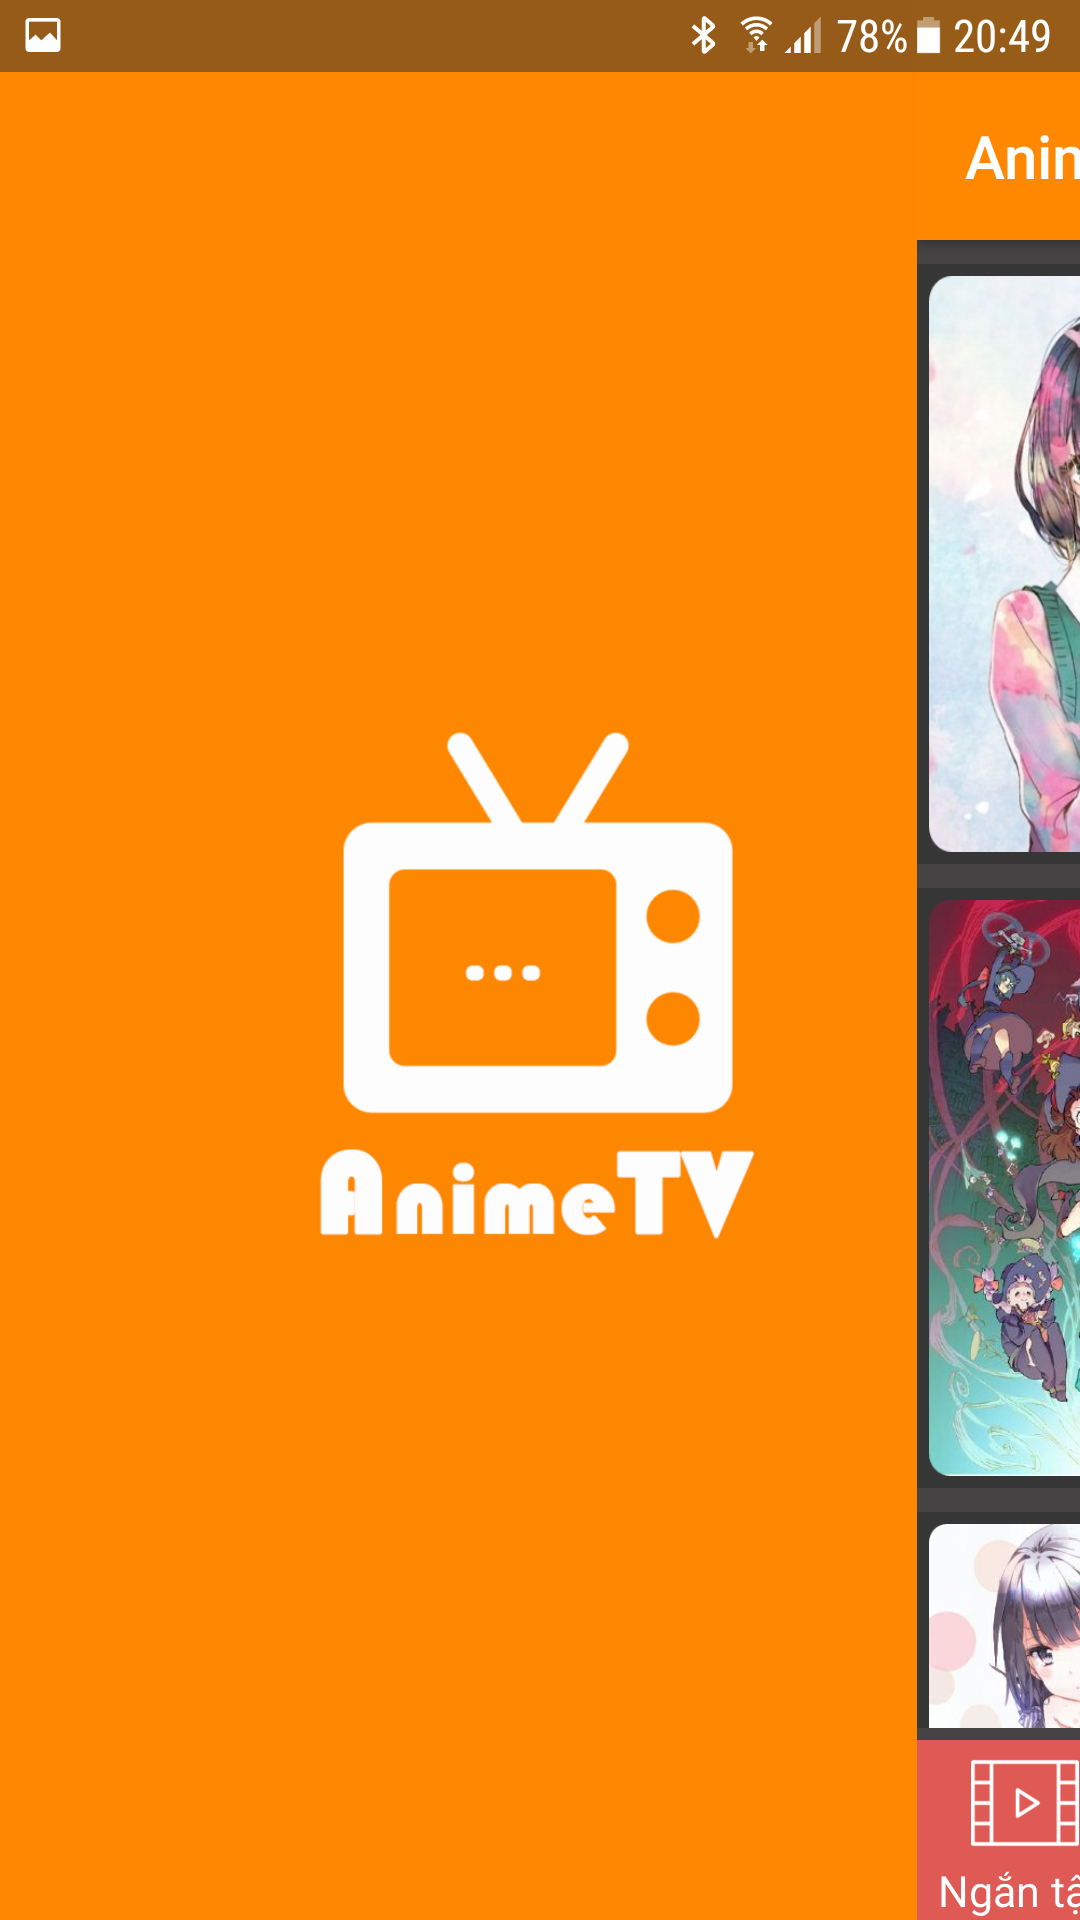 About: Anime TV (Vietsub) - Xem Anime (Google Play version) | | Apptopia